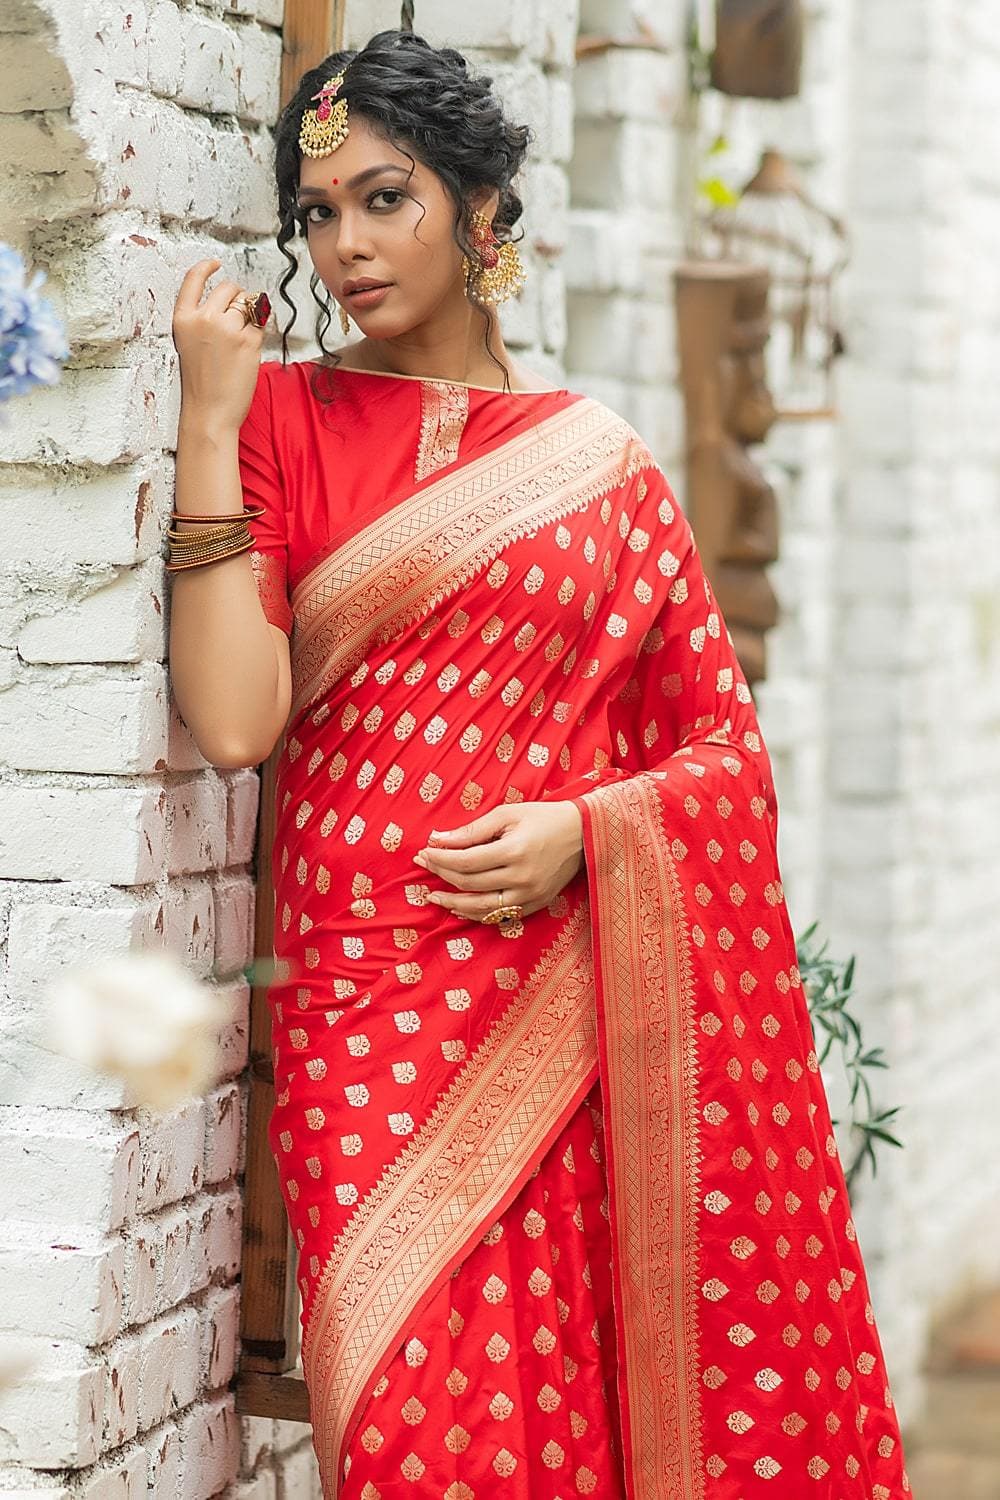 Share more than 79 red banarsi saree best